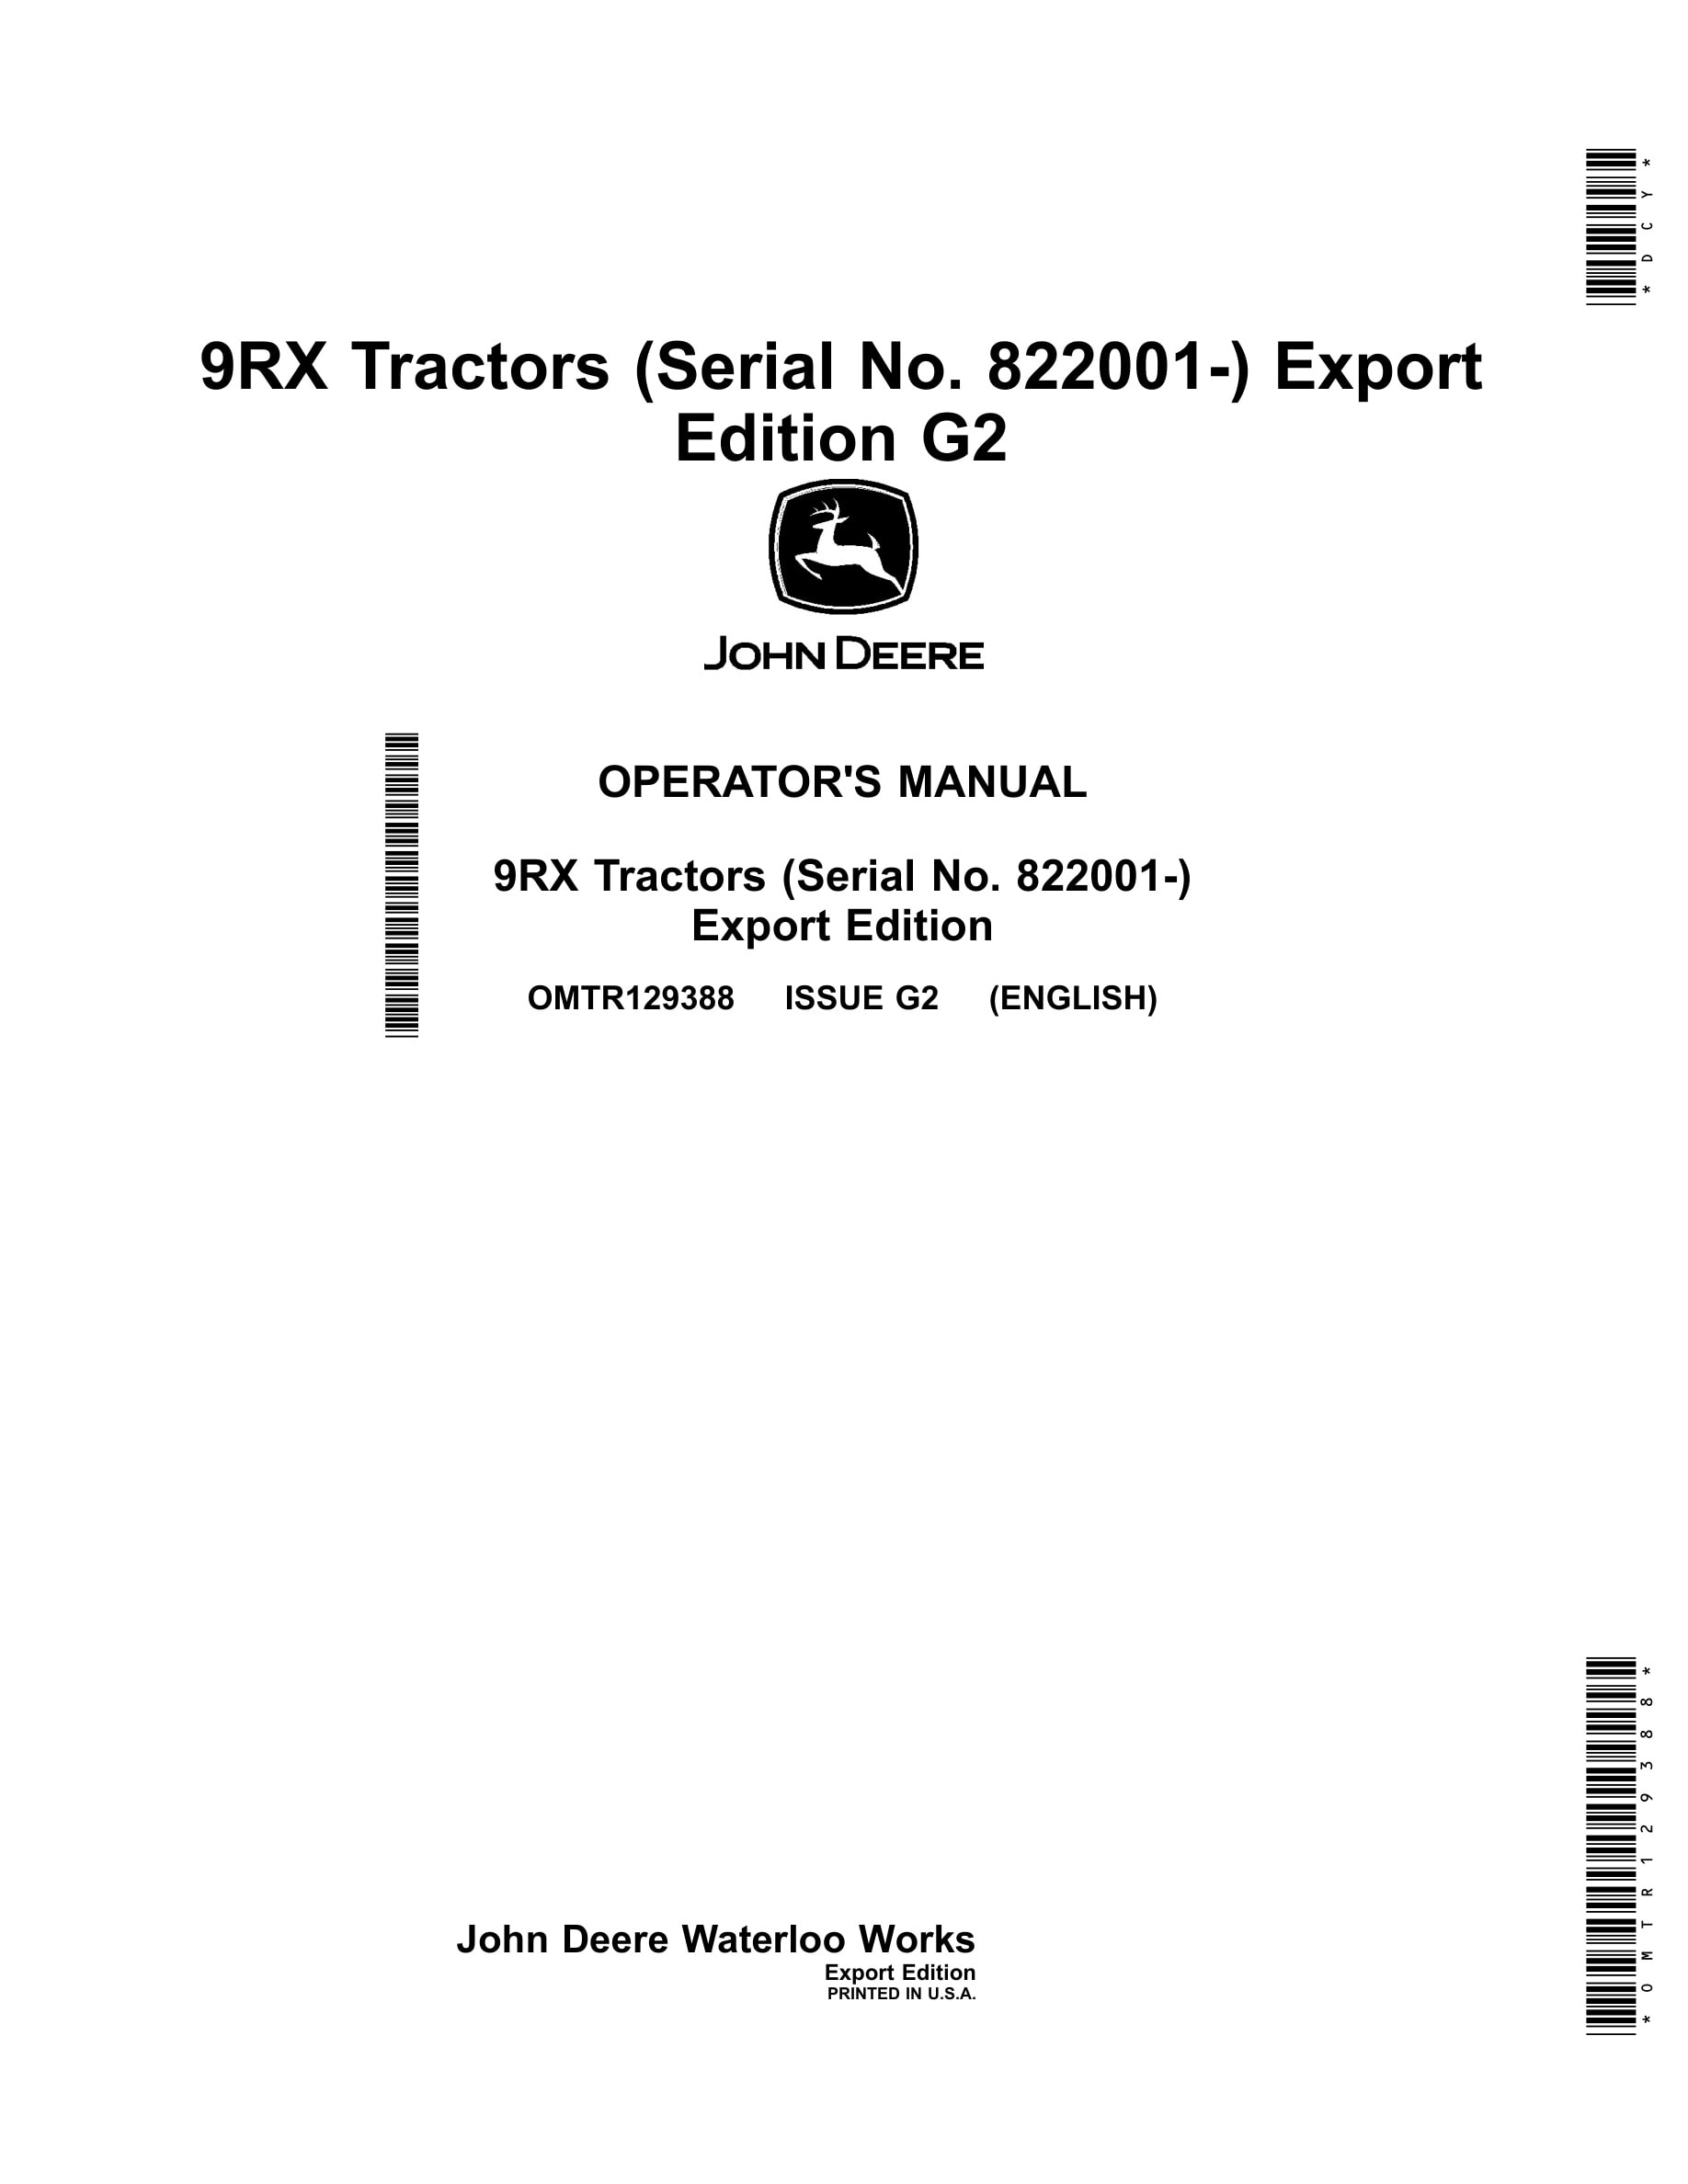 John Deere 9rx Tractors Operator Manuals OMTR129388-1